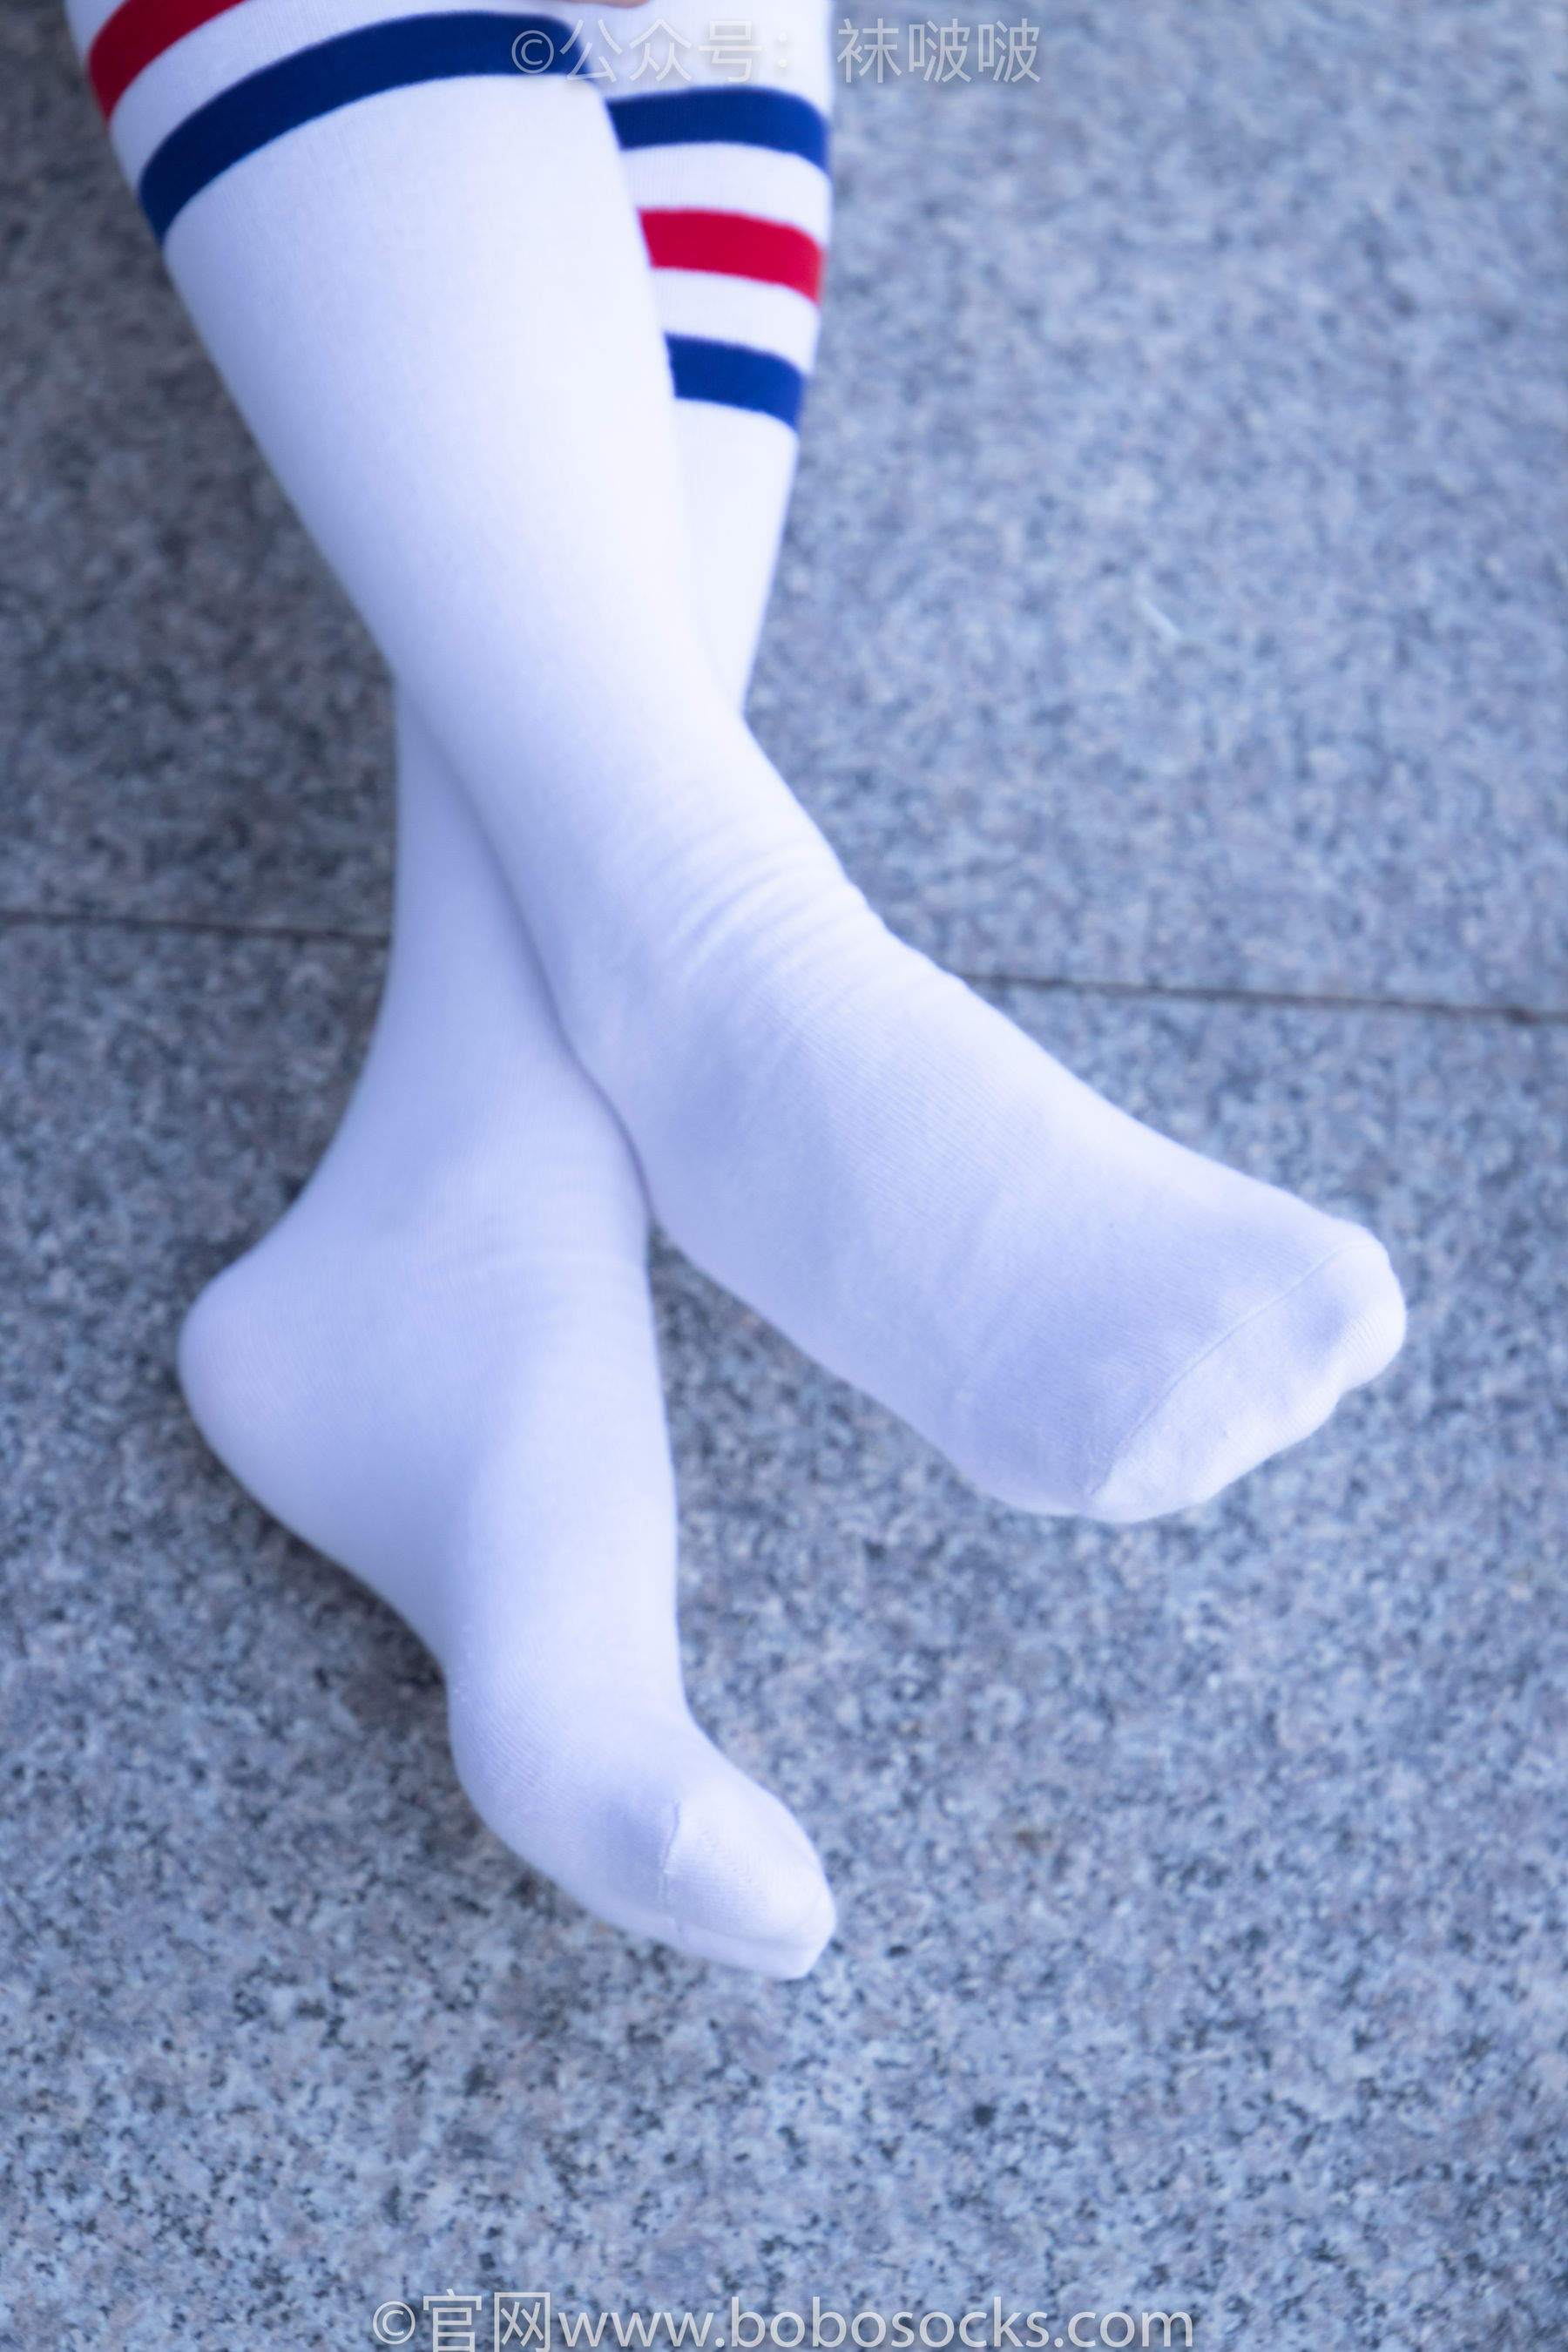 BoBoSocks袜啵啵 No.006 小米-运动鞋、白色小腿袜、裸足/(130P)